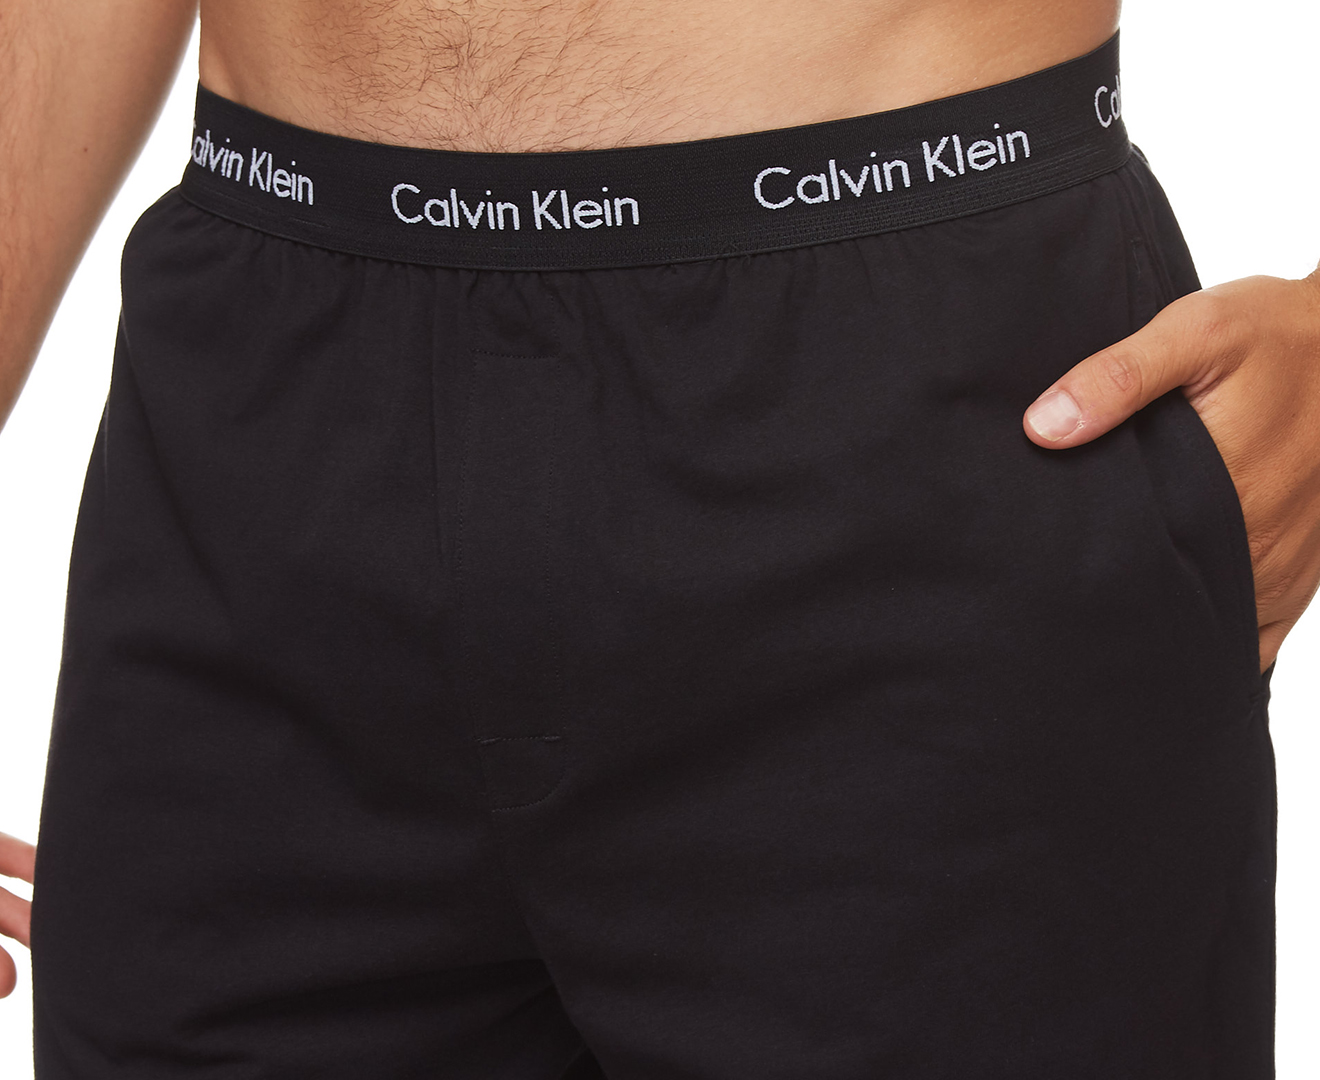 Calvin Klein Men's Sleep Pant - Black | Catch.com.au